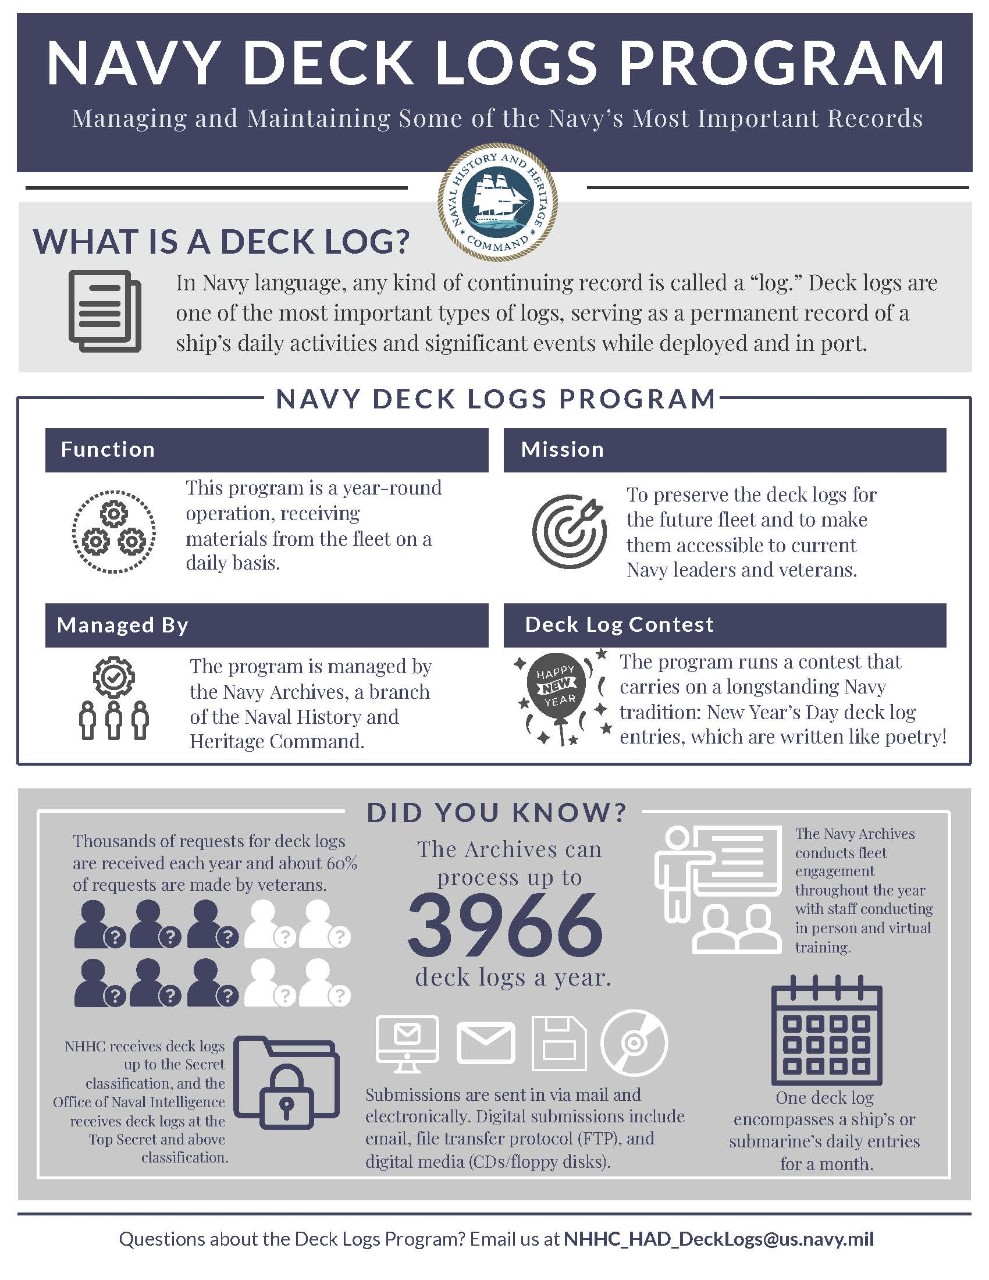 Navy Archives Deck Logs Program Infographic JPEG